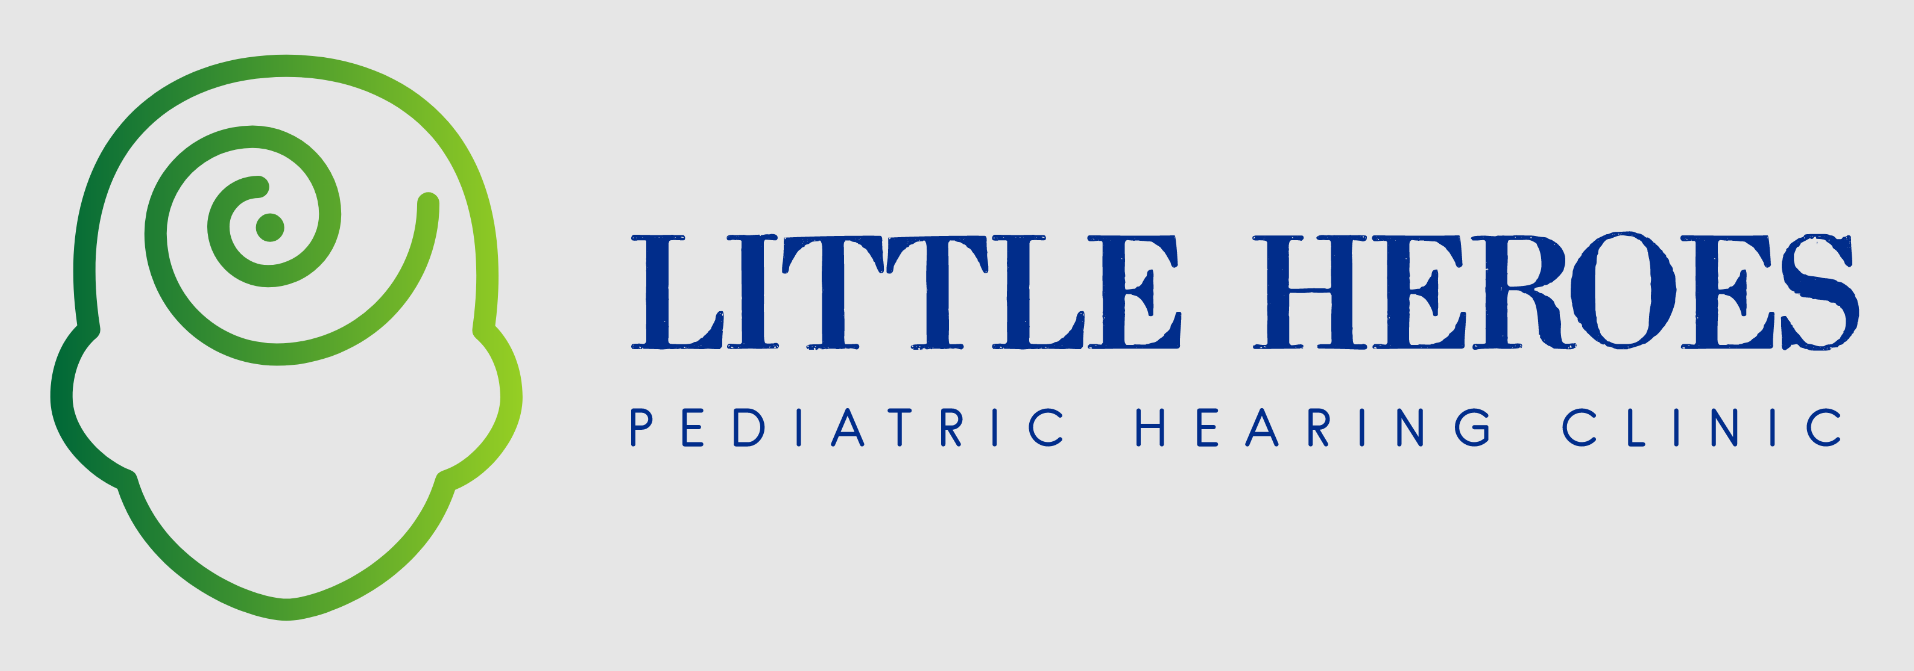 Little Heroes Pediatric Hearing Clinic